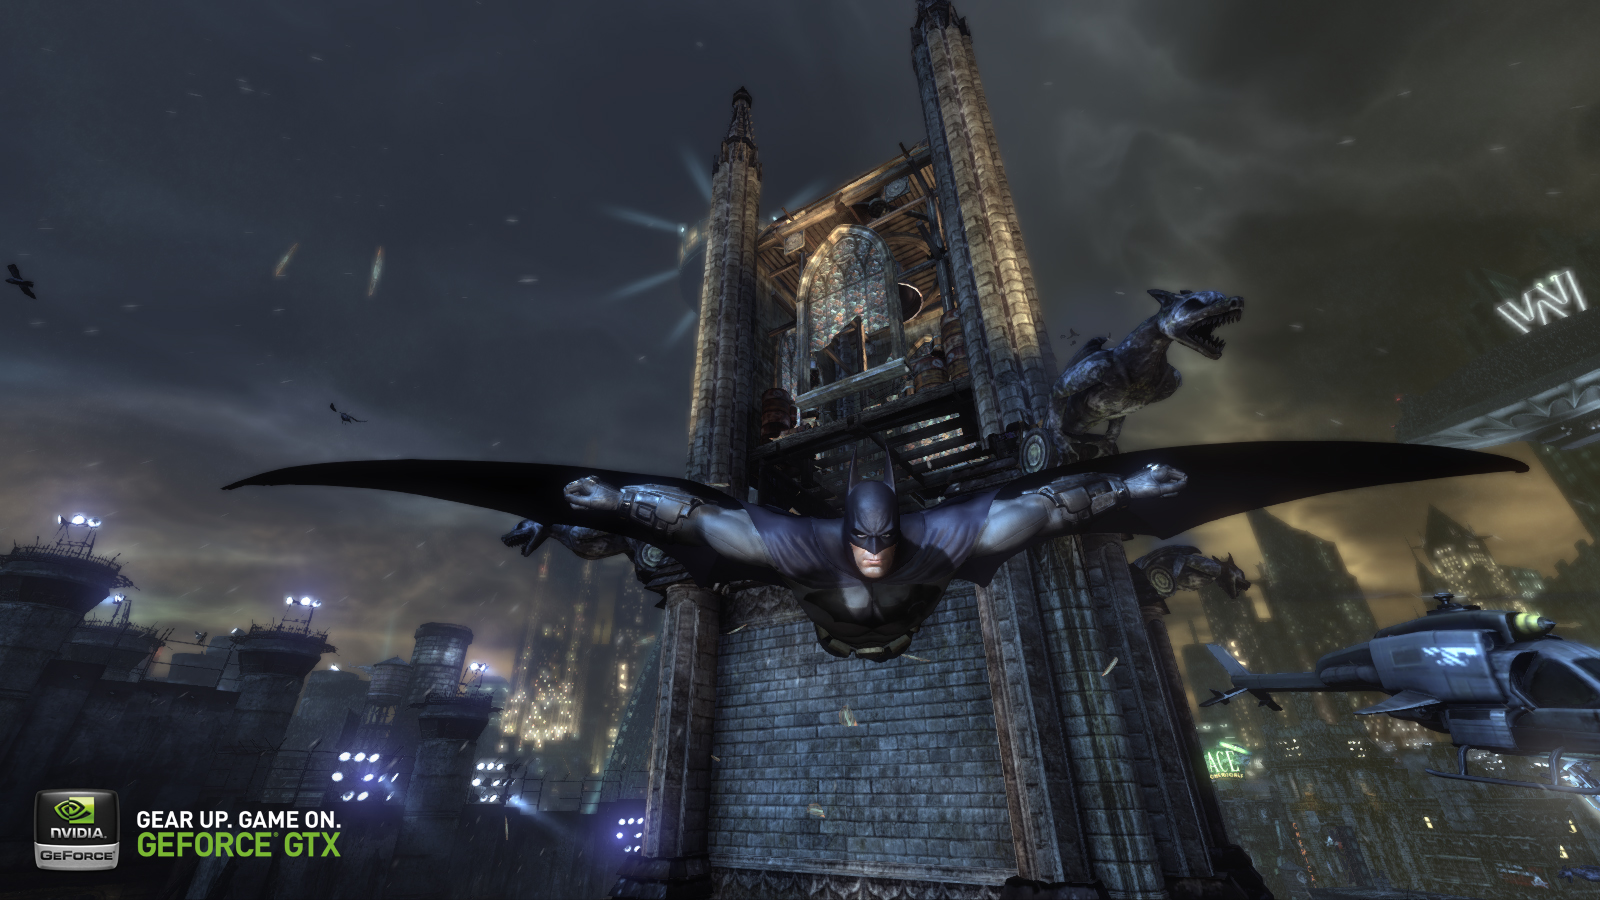 Media asset in full size related to 3dfxzone.it news item entitled as follows: Batman: Arkham City, requisiti per PC e nuovi contenuti da NVIDIA | Image Name: news15911_1.jpg